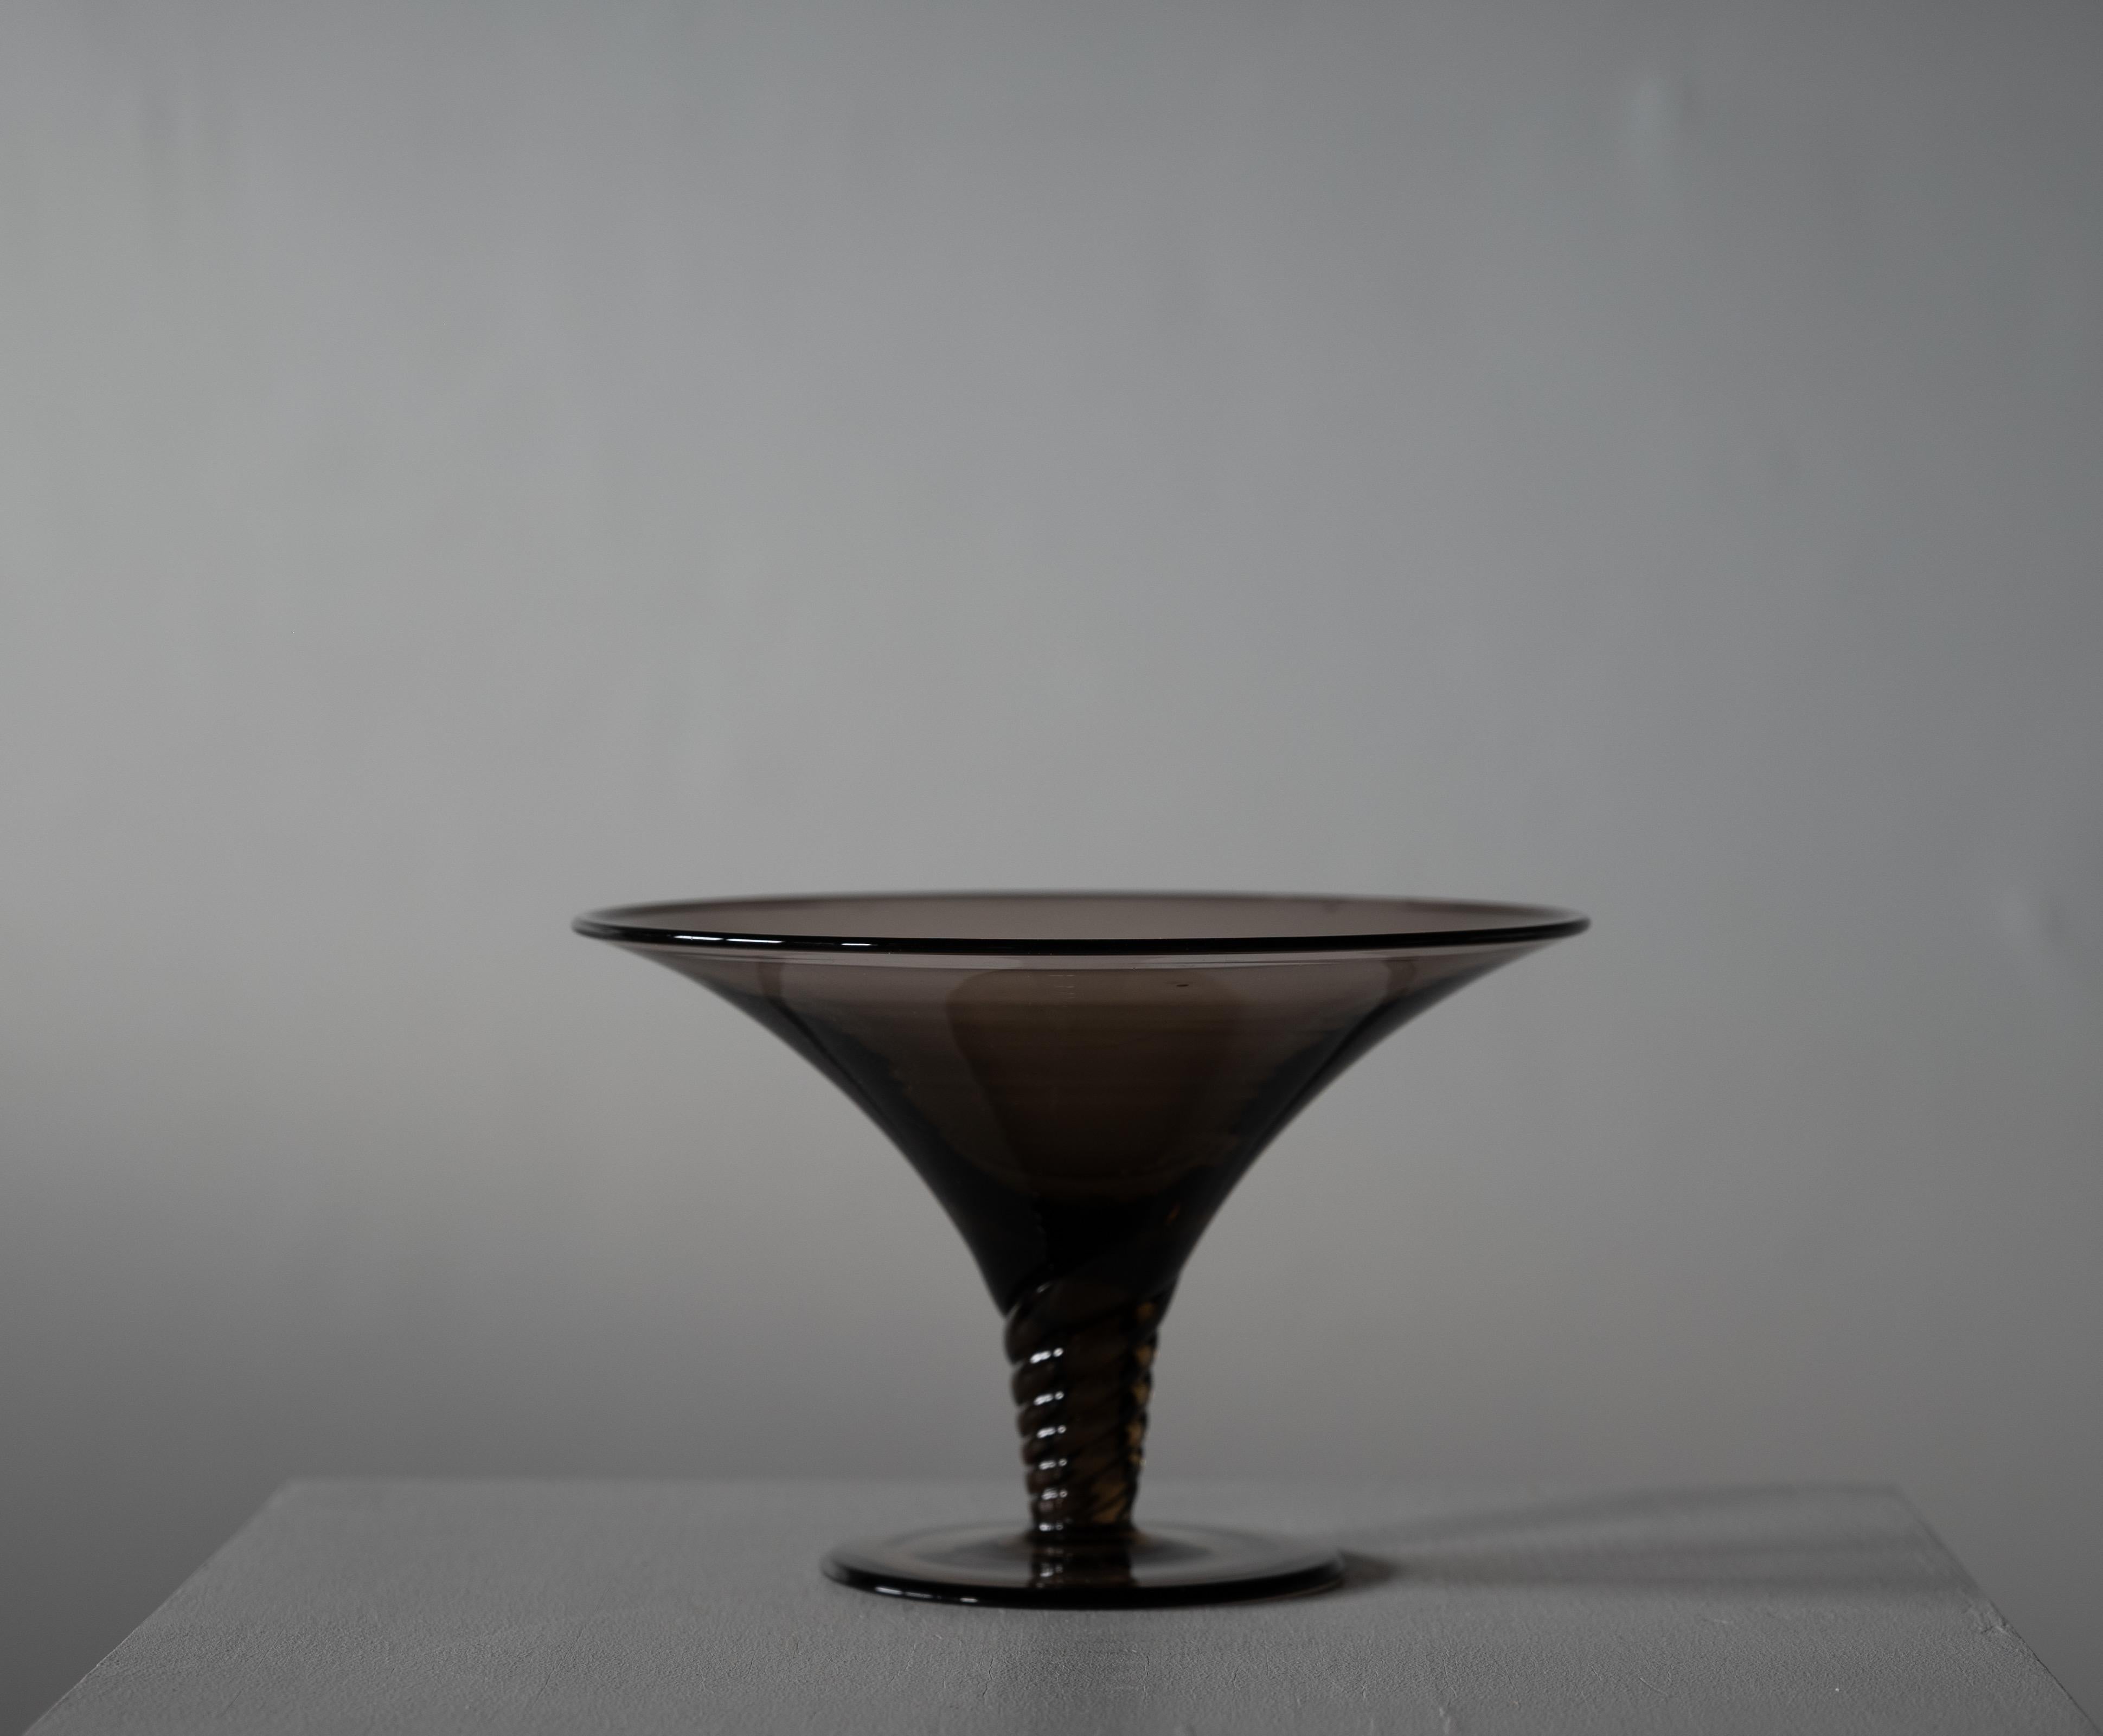 A bowl / vase. Design attributed to Simon Gate for Orrefors Glasbruk, Sweden, c. 1920s.